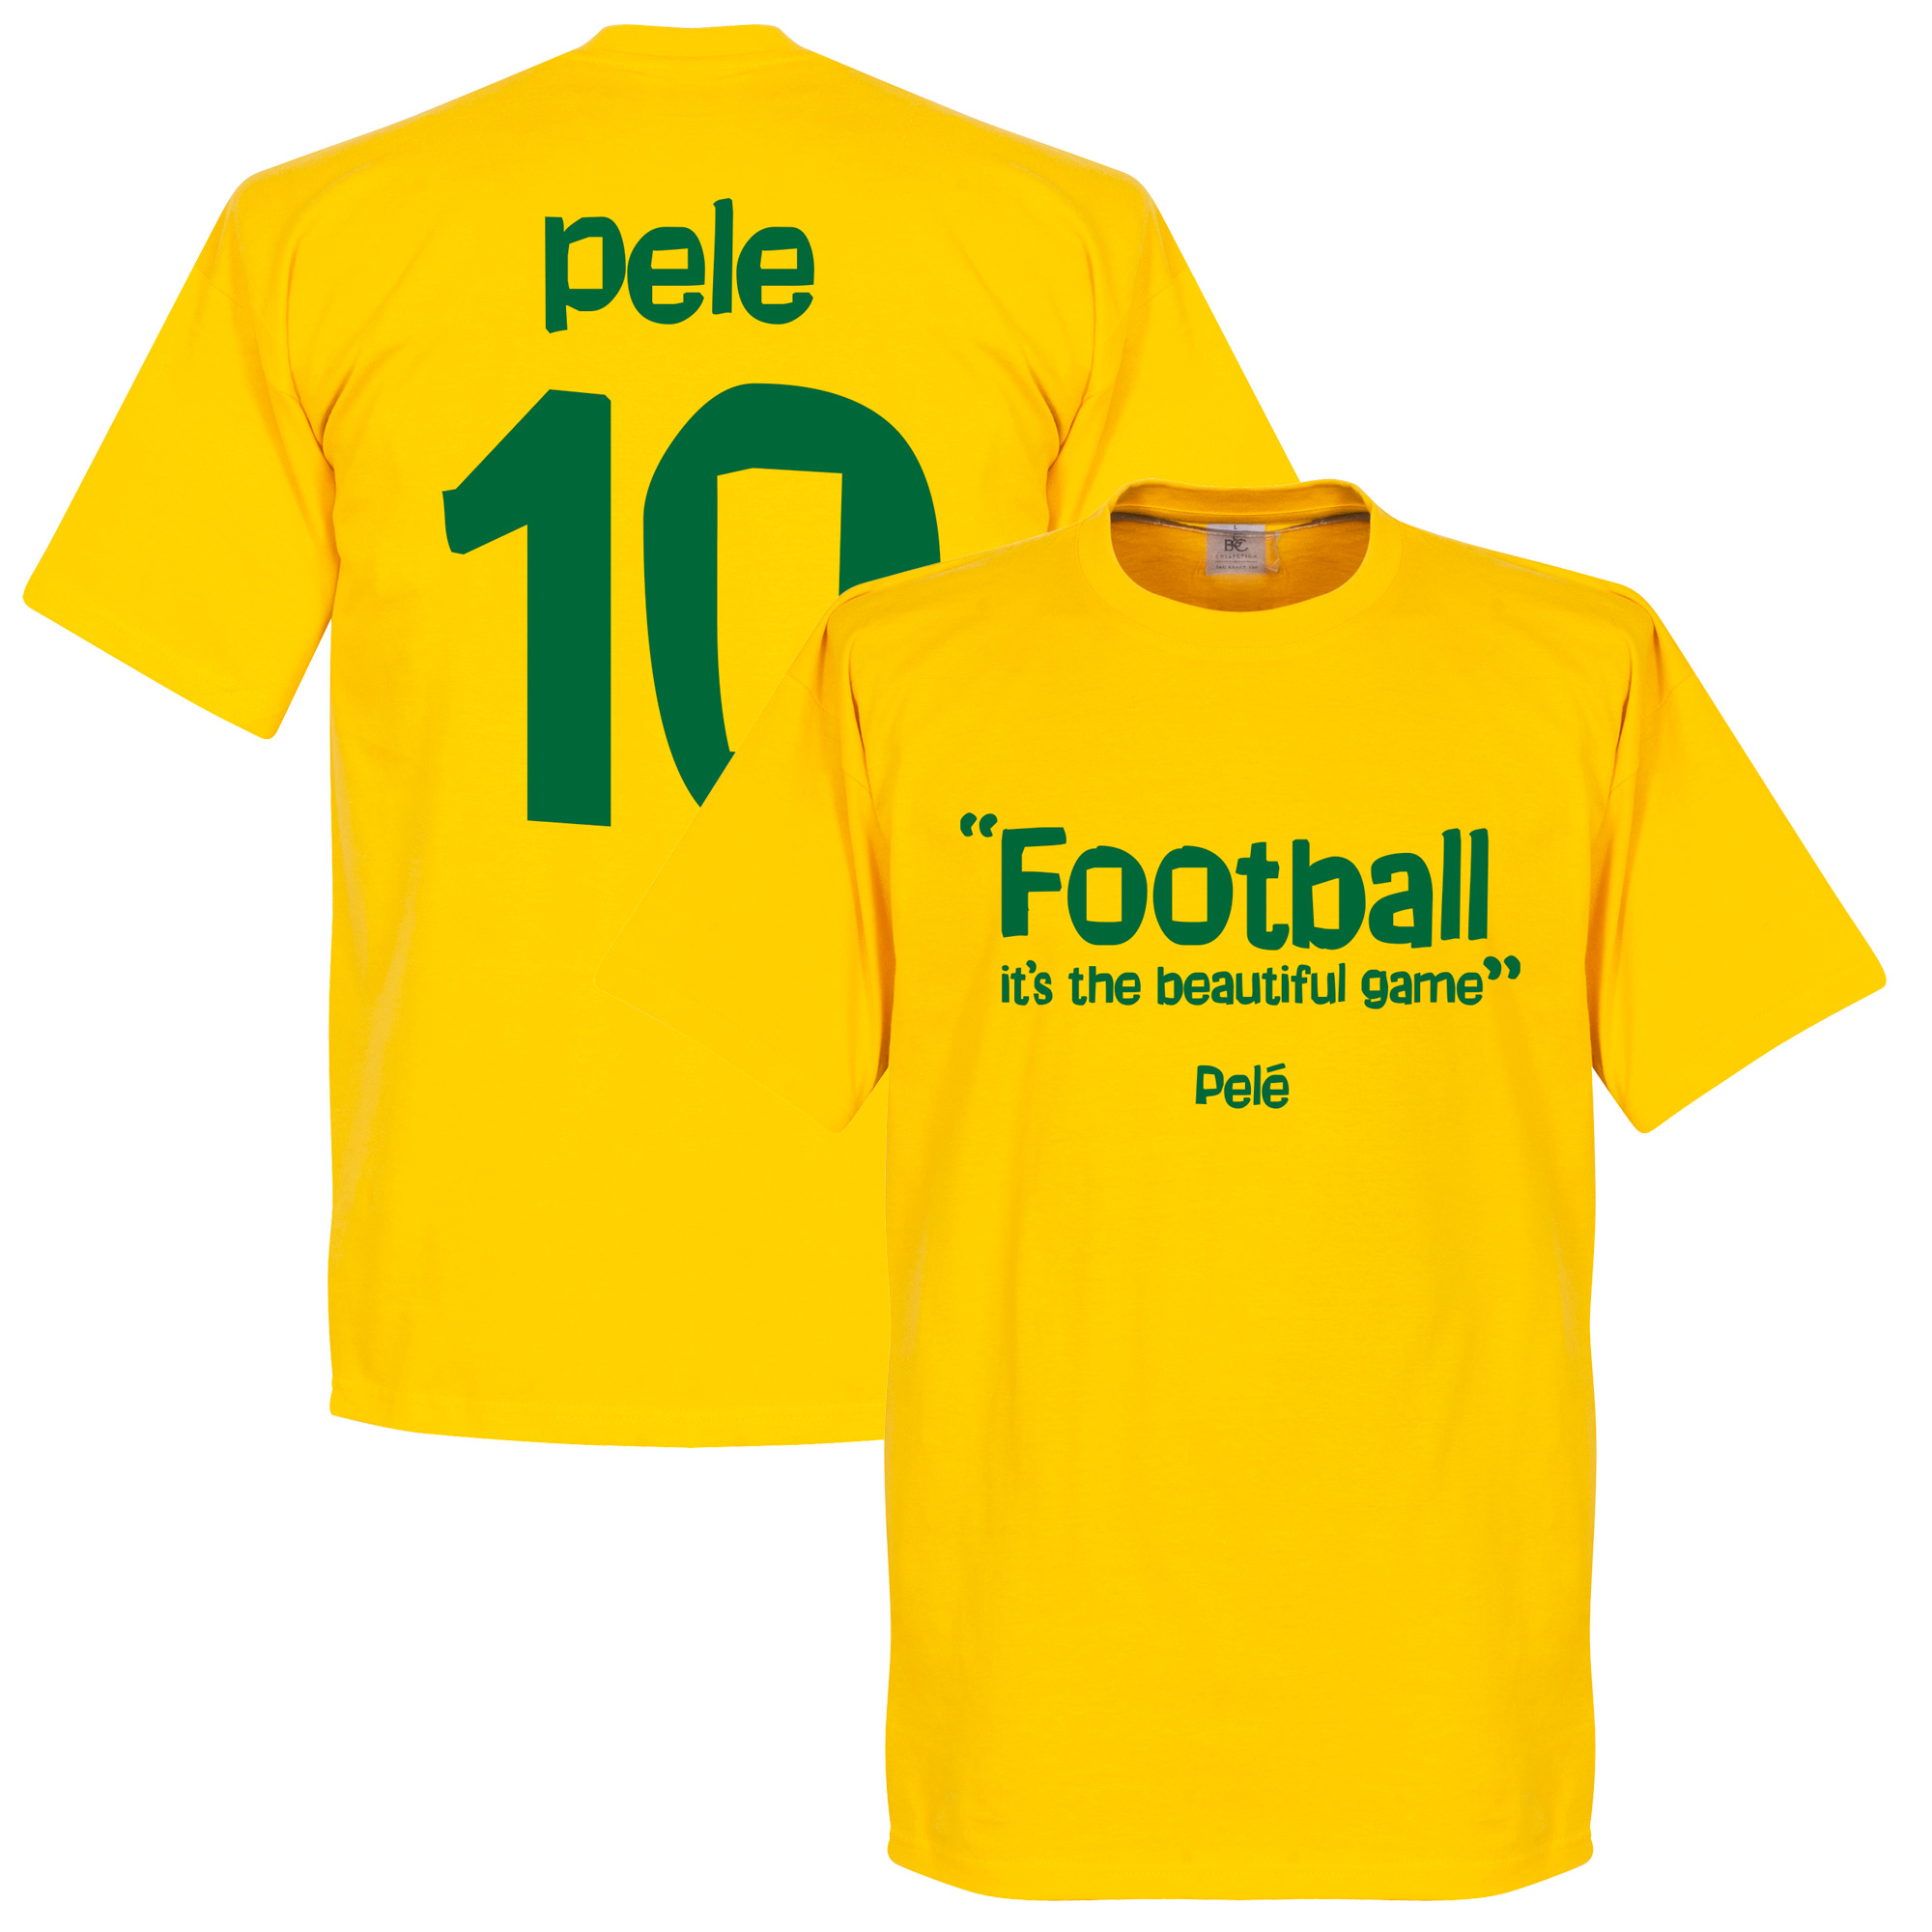 Pele 10 Football It's the Beautiful Game T-shirt S